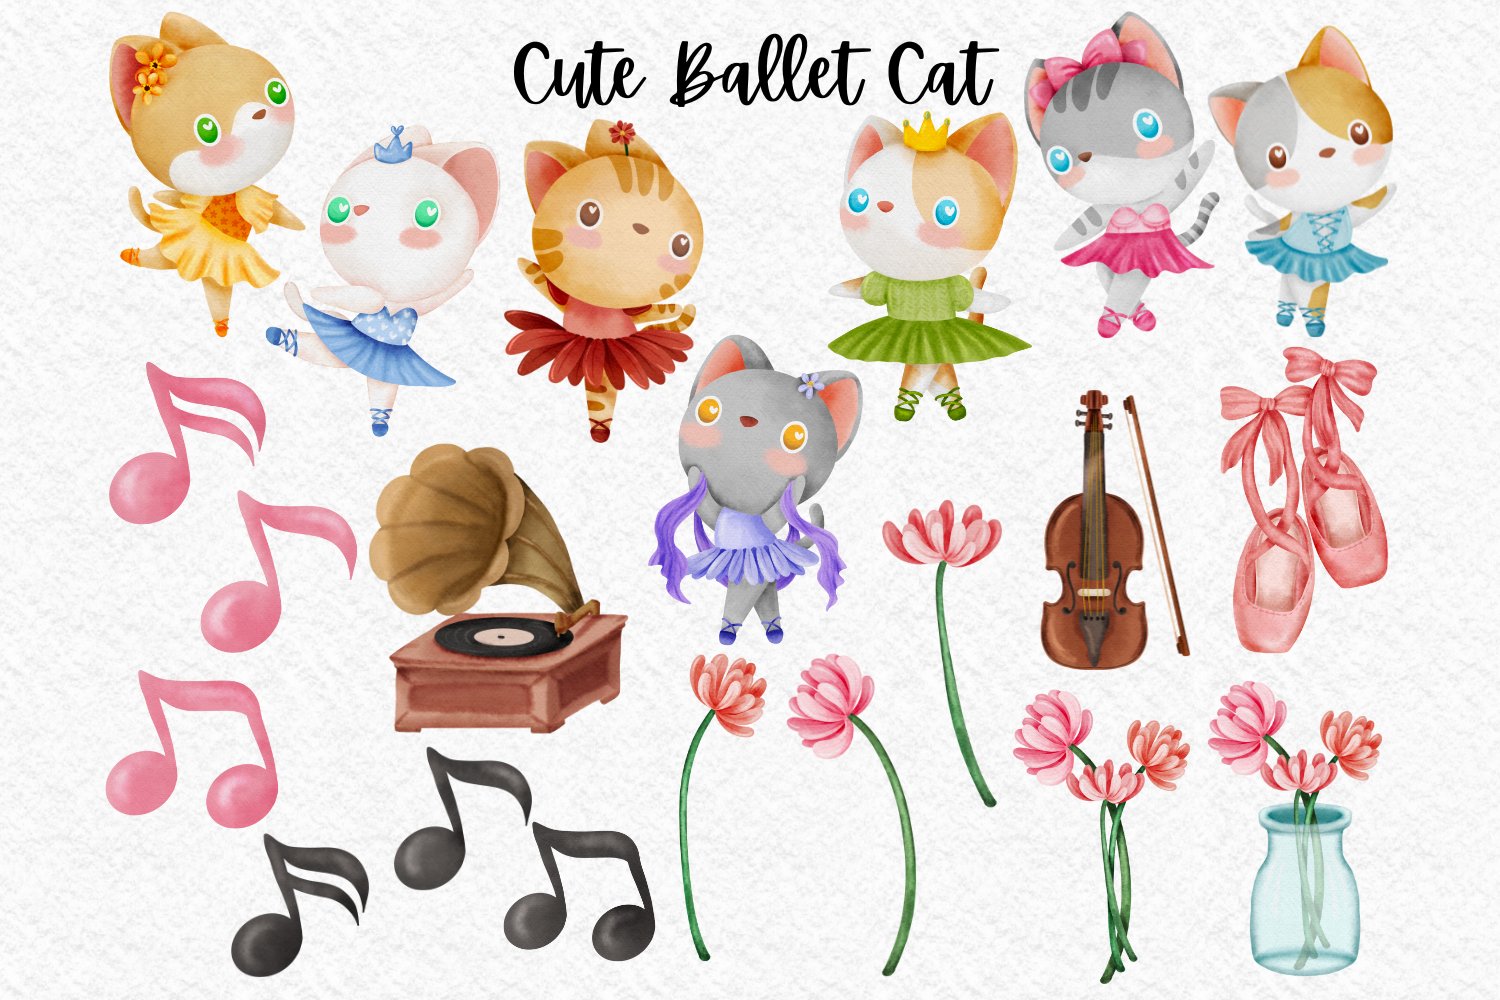 Cute Ballet Cat watercolor clipart preview image.